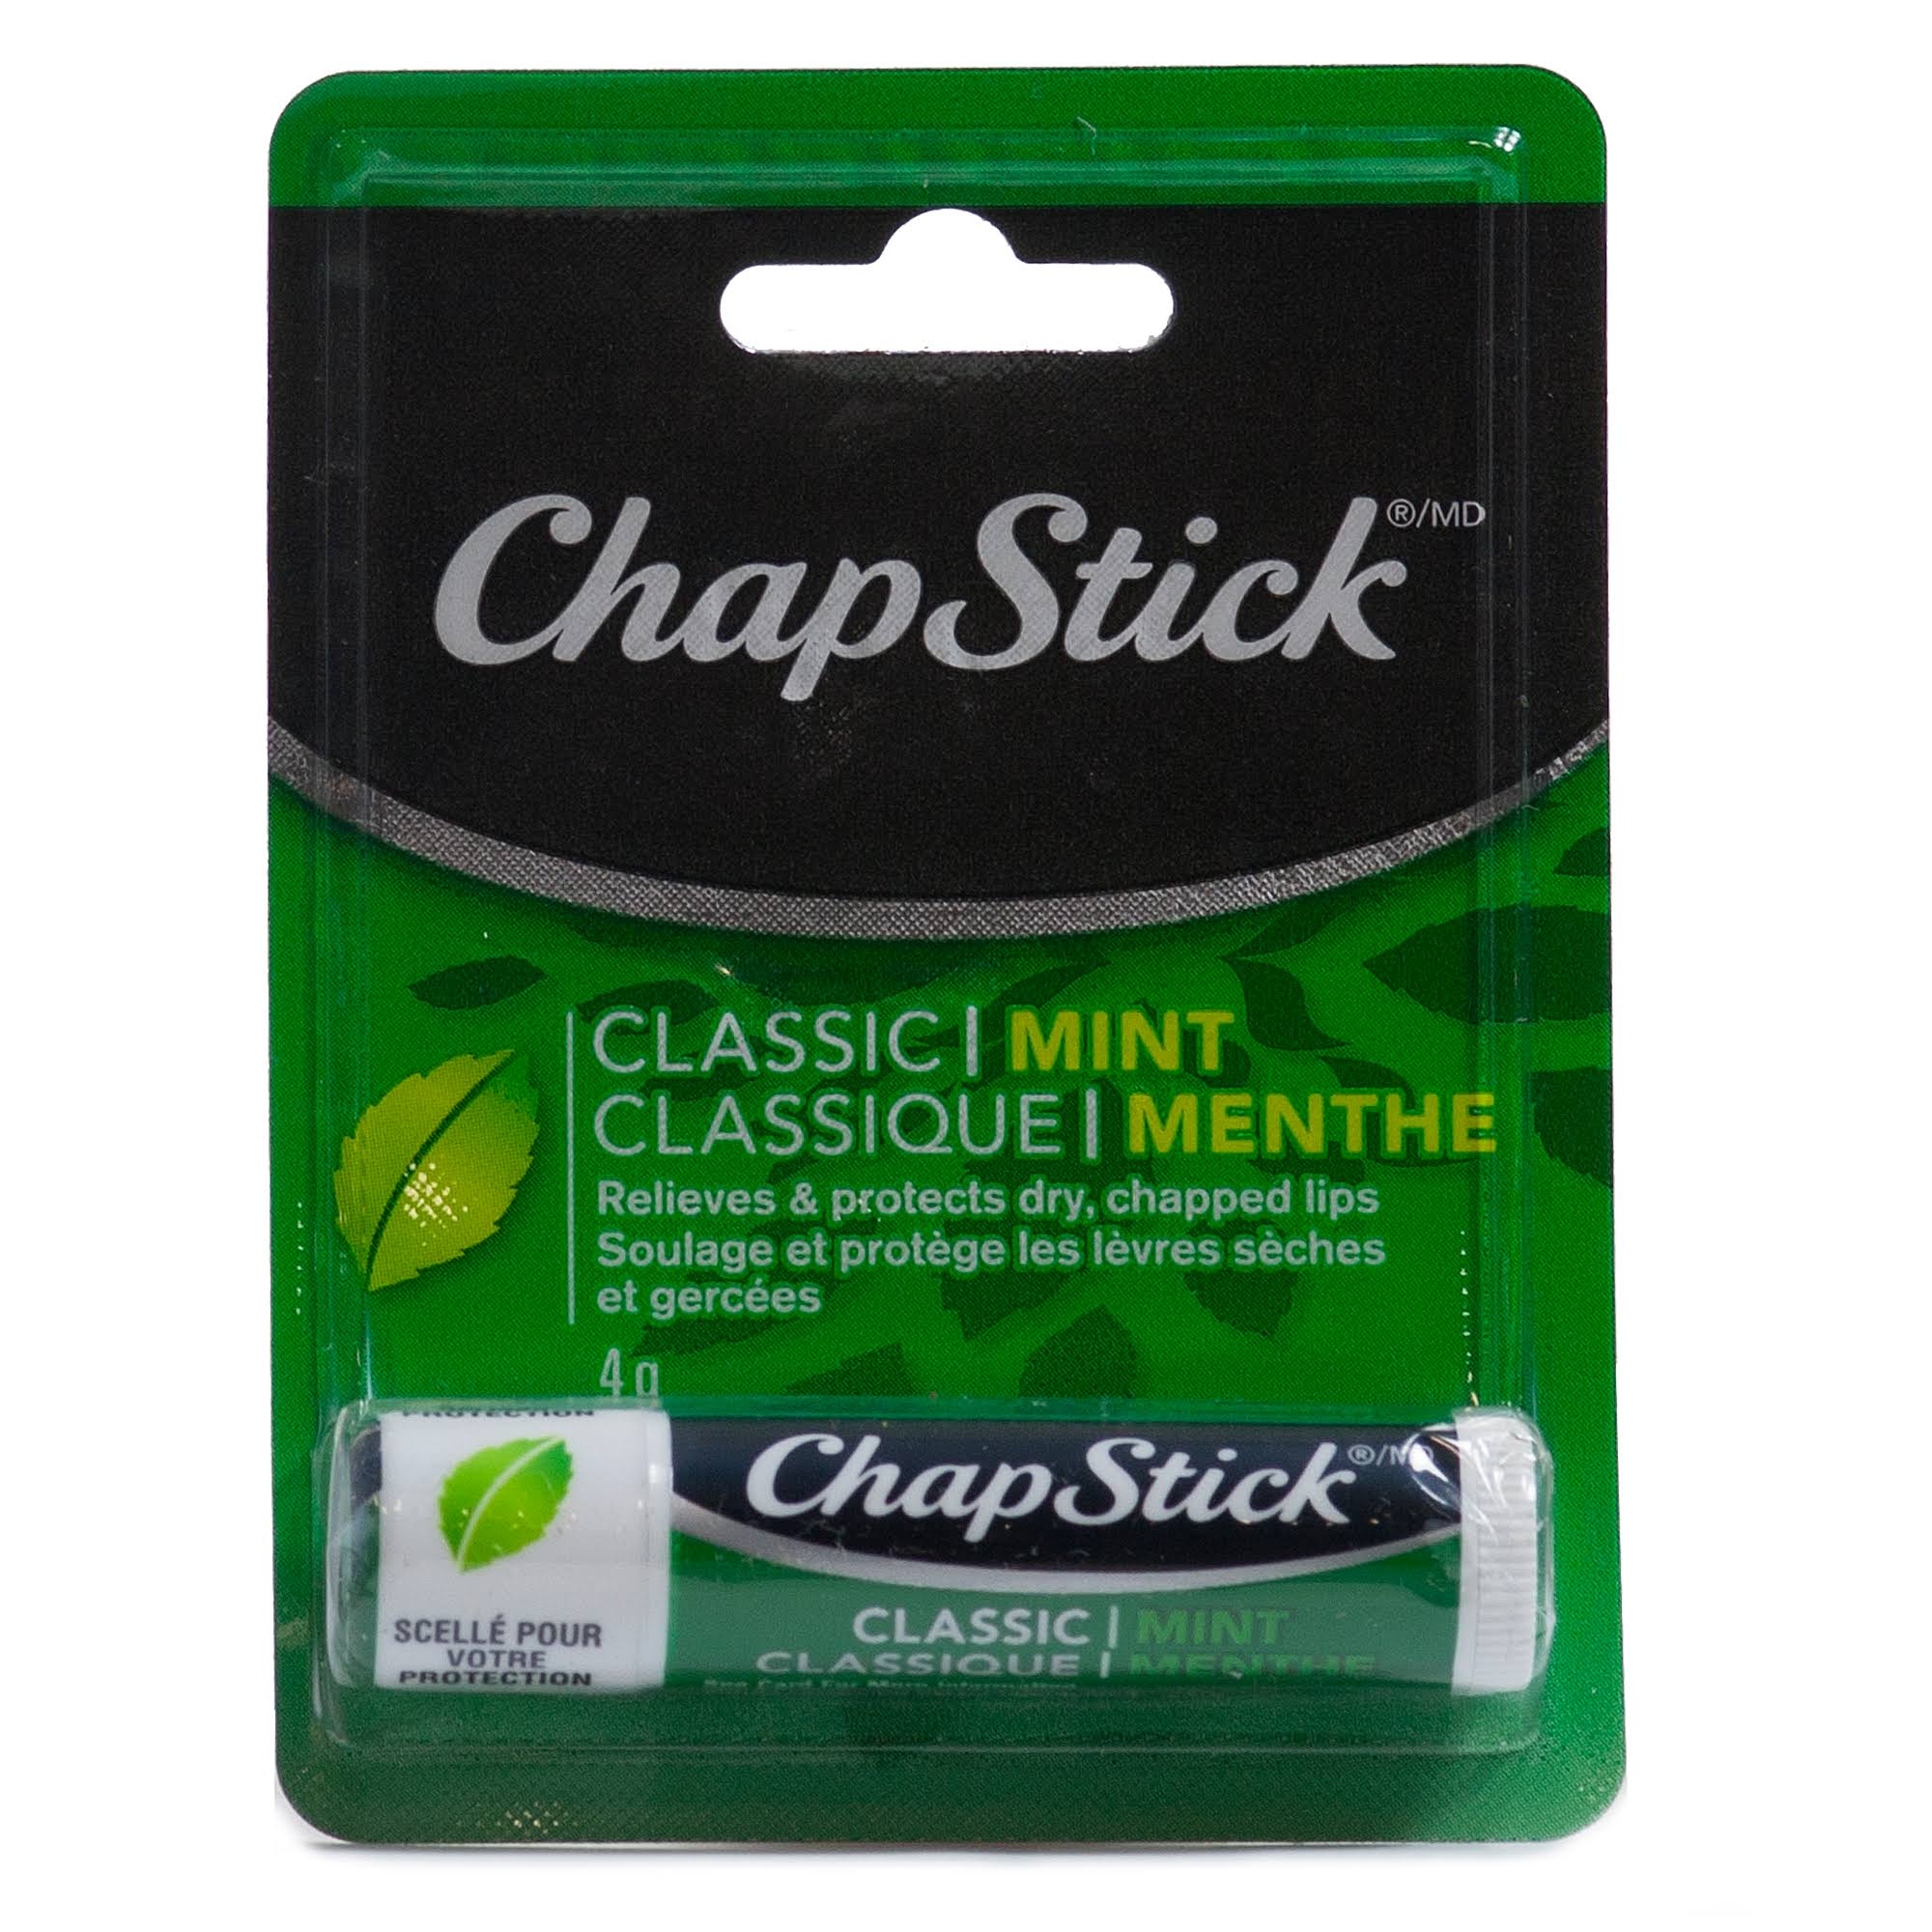 Chap Stick Lip Balm - Classic Mint, 4g